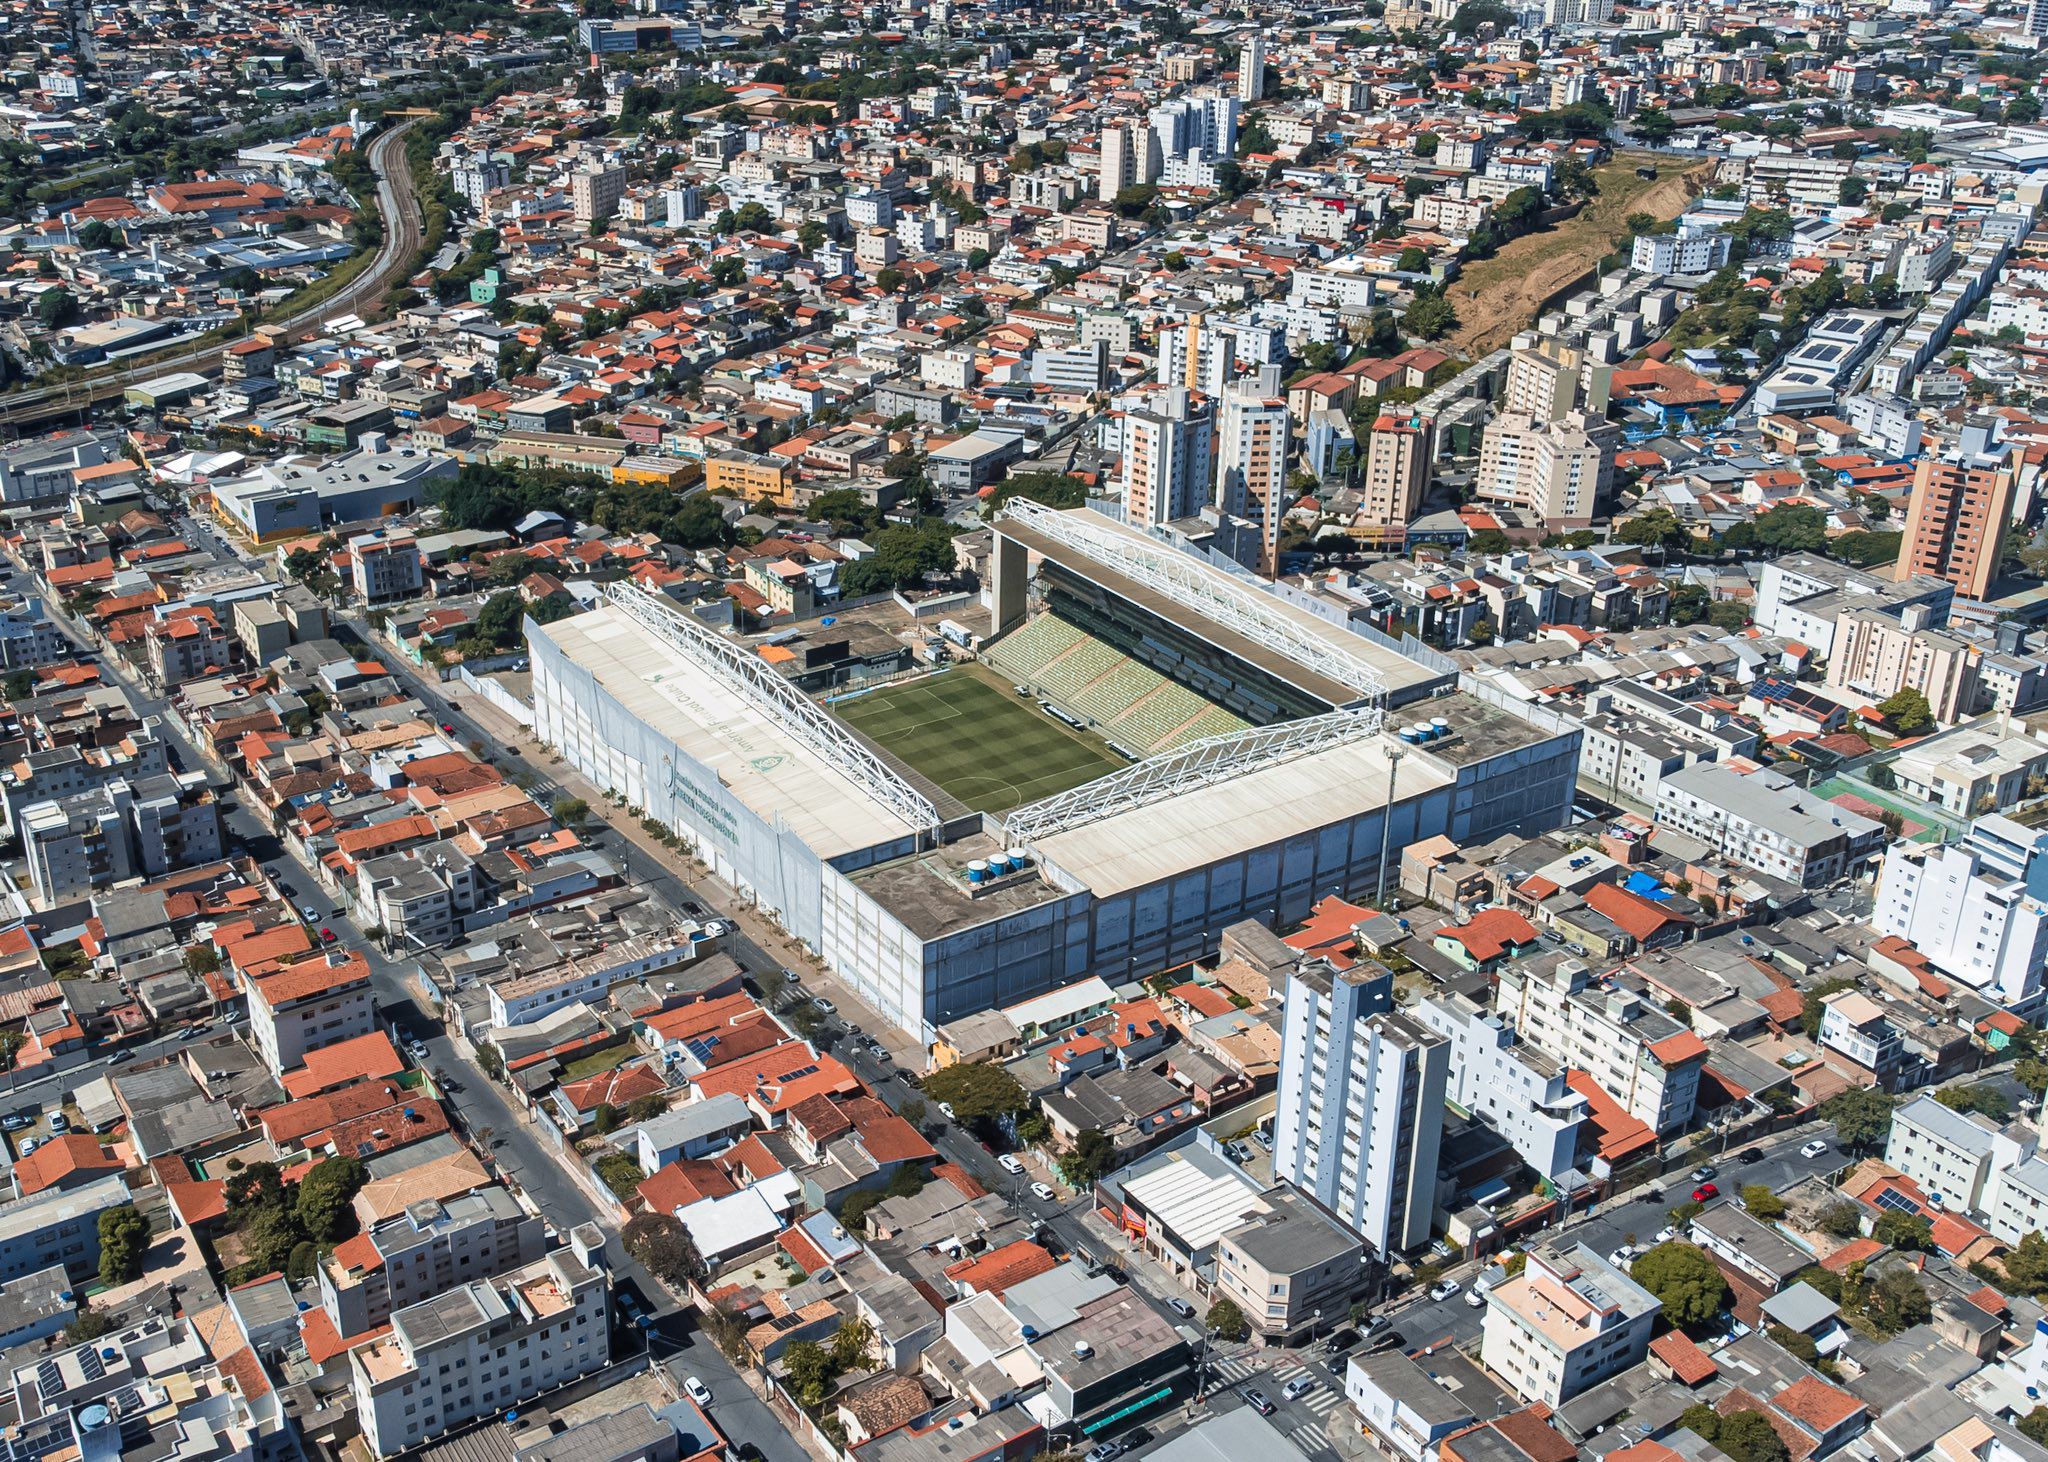 Raimundo Sampaio Stadium, ready for the Alianza Lima vs Atlético Mineiro match for the Copa Libertadores.